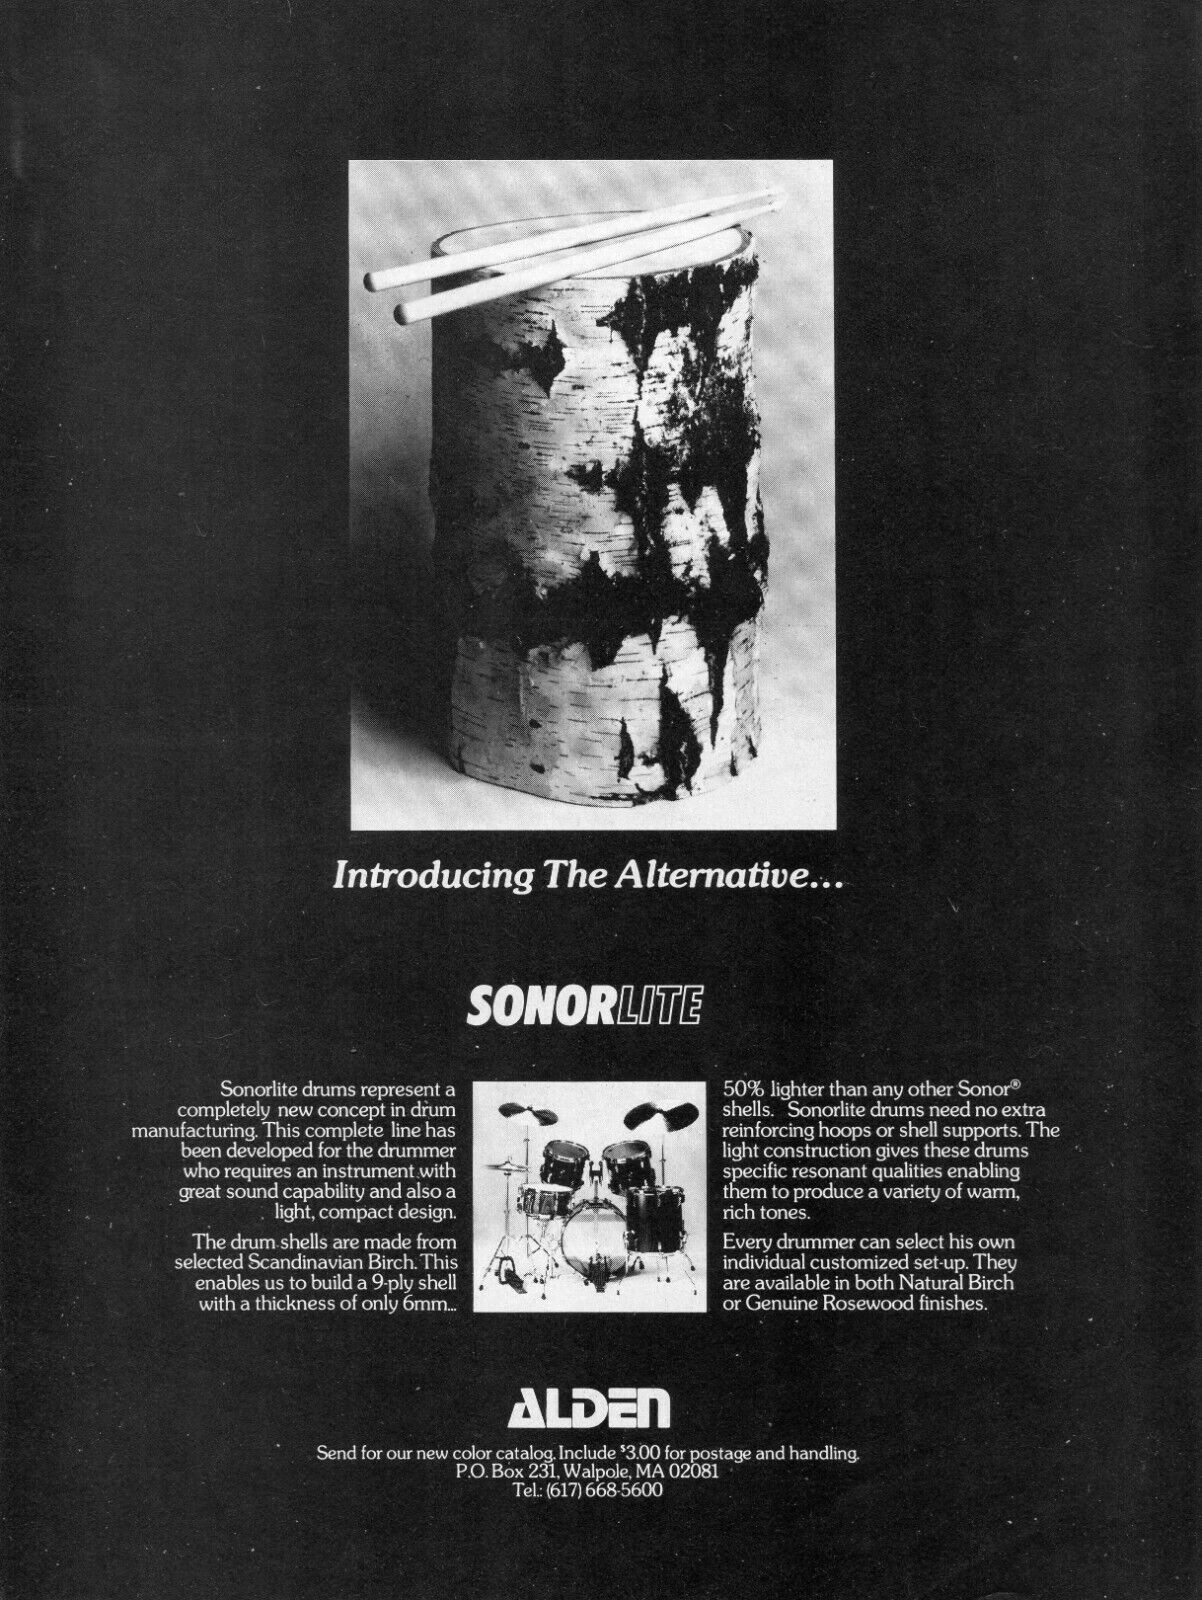 1983 Print Ad of Alden Sonor Sonorlite Drum Kit introducing the alternative